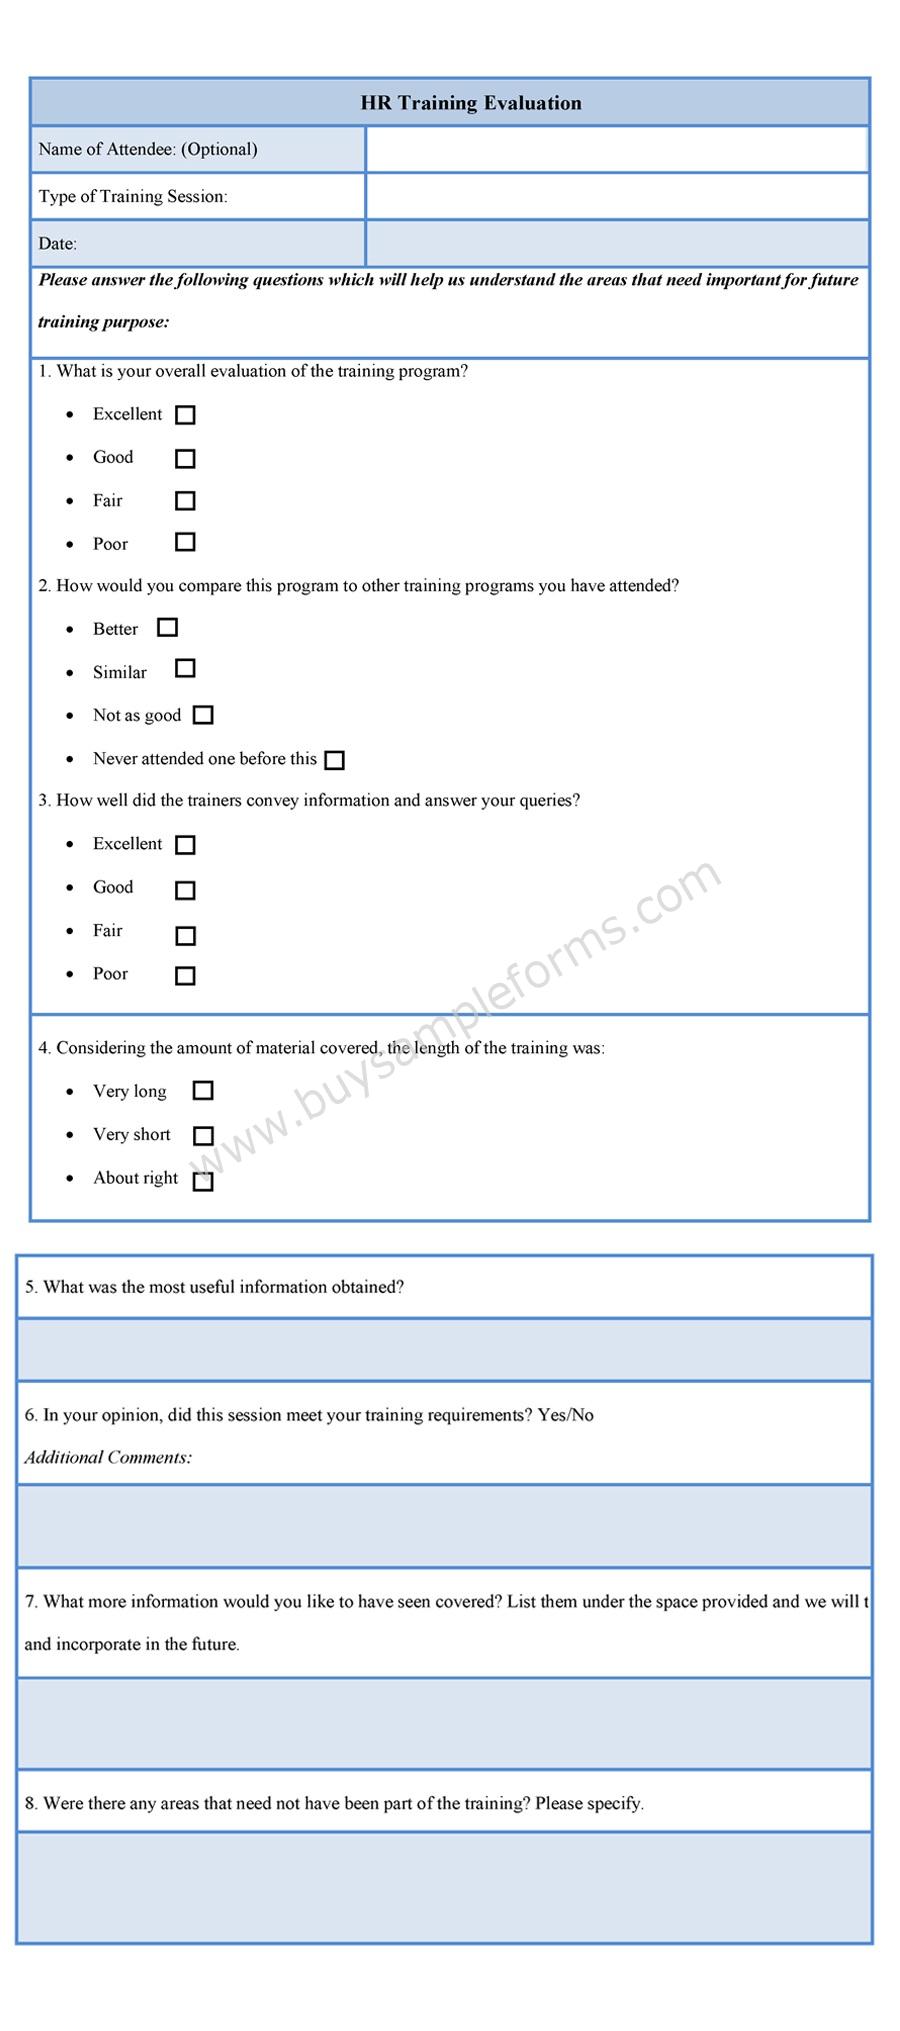 Sample HR Training Evaluation Form